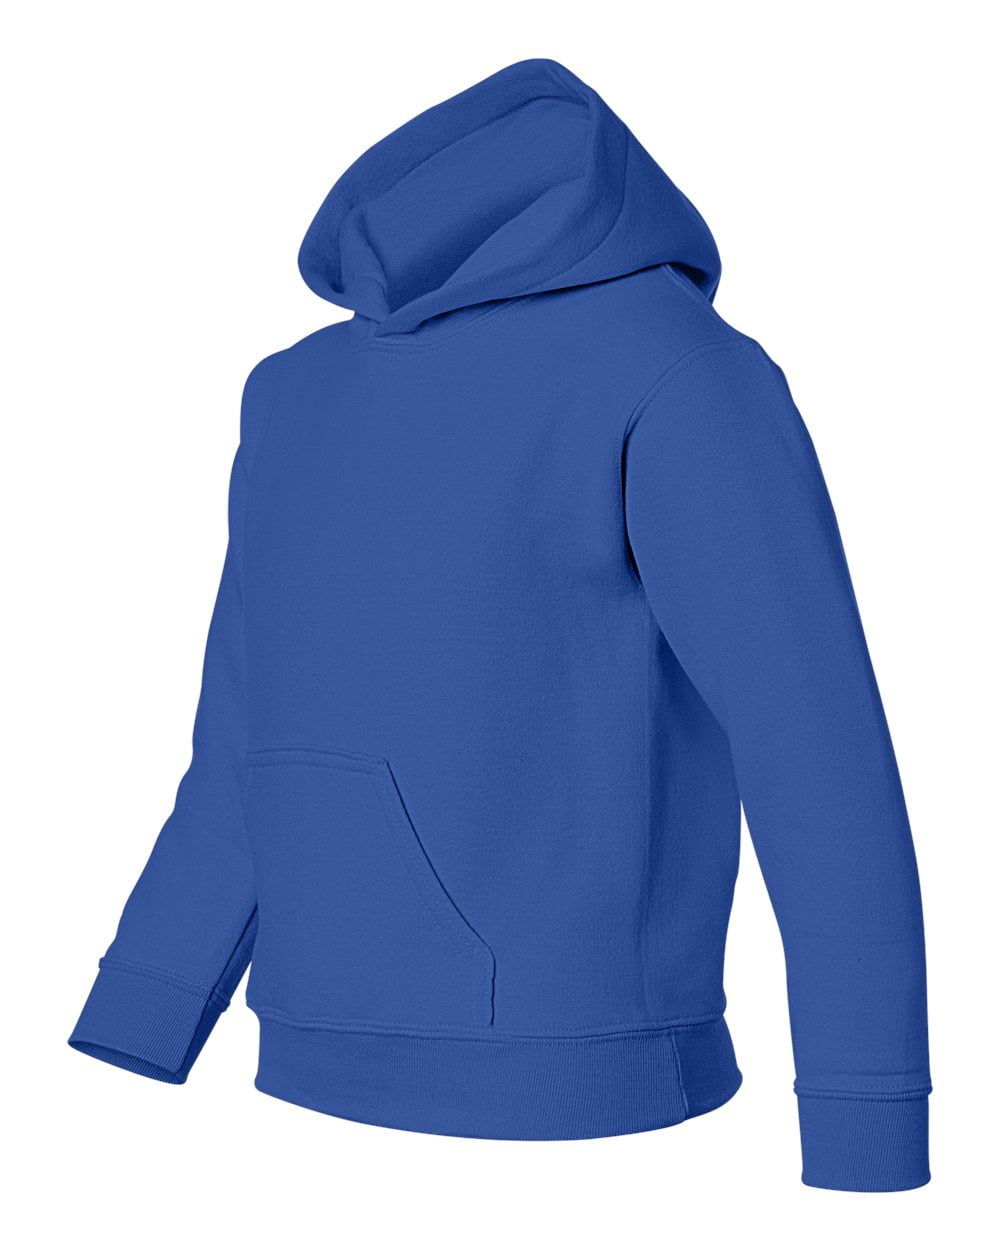 Nib - Big Boys Hoodies and Sweatshirts - Louisville, Kids Unisex, Size: Large, Blue